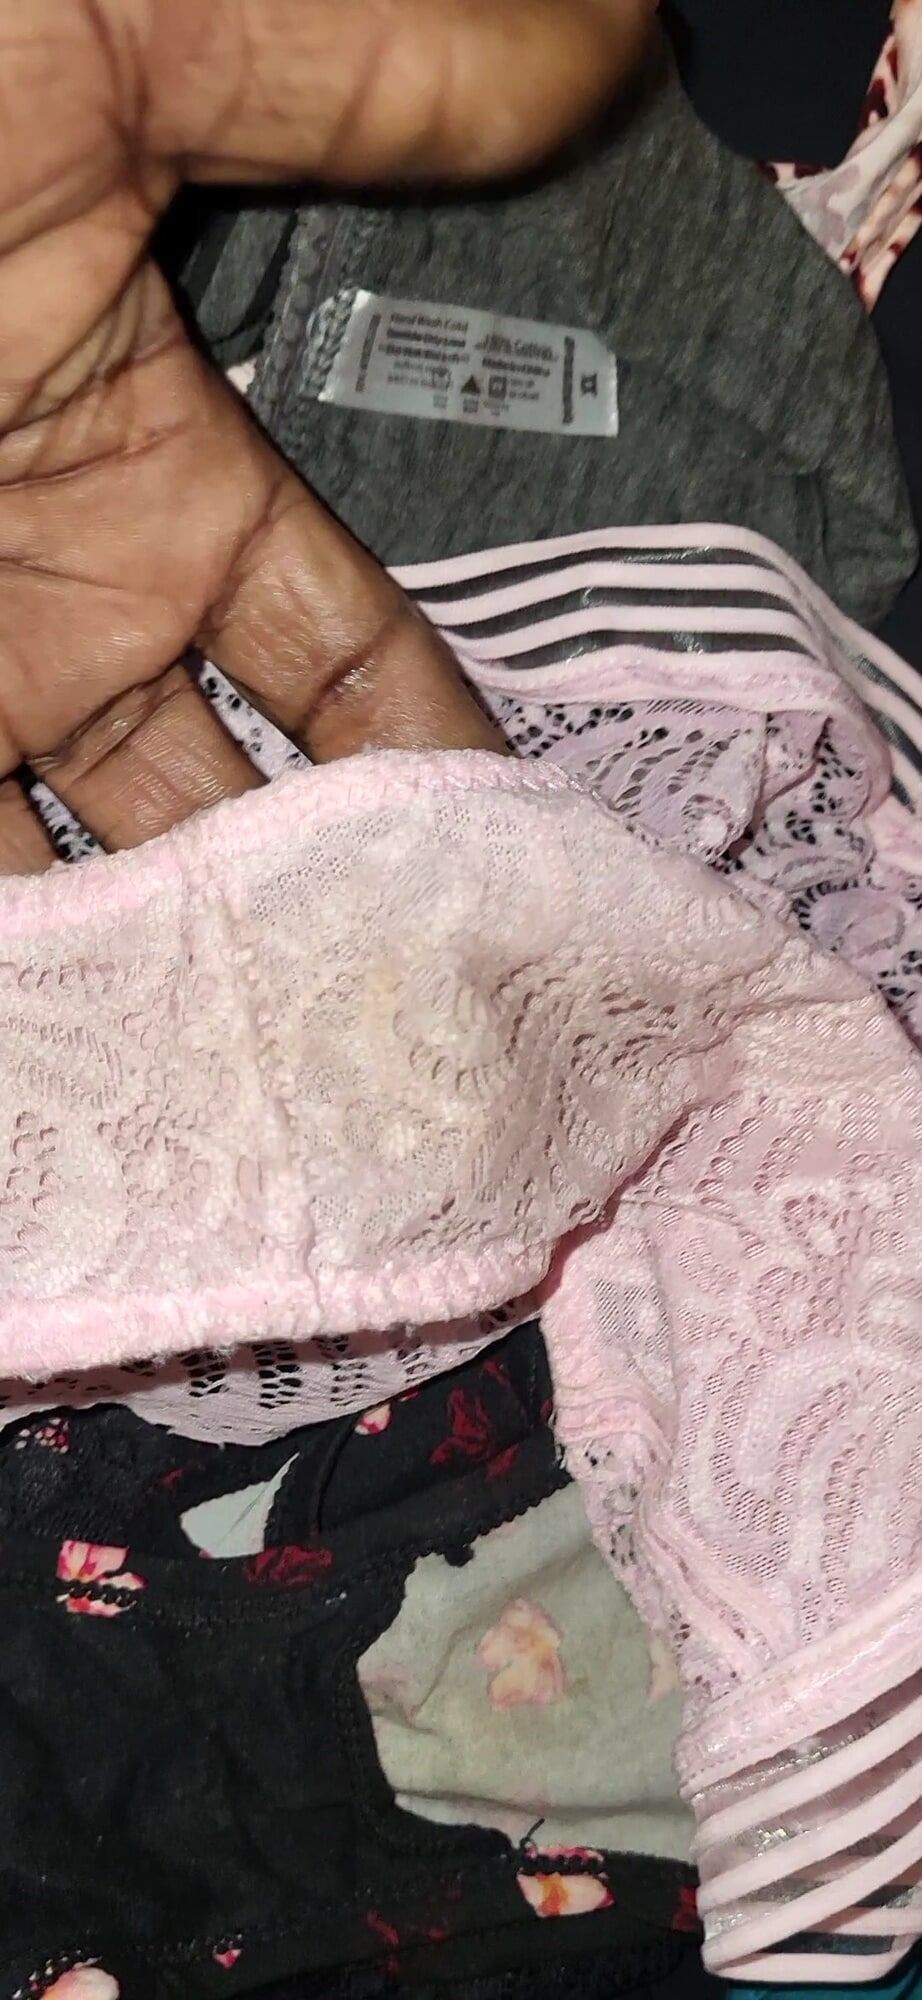 Wife's Dirty Panties Laundry Bag #13